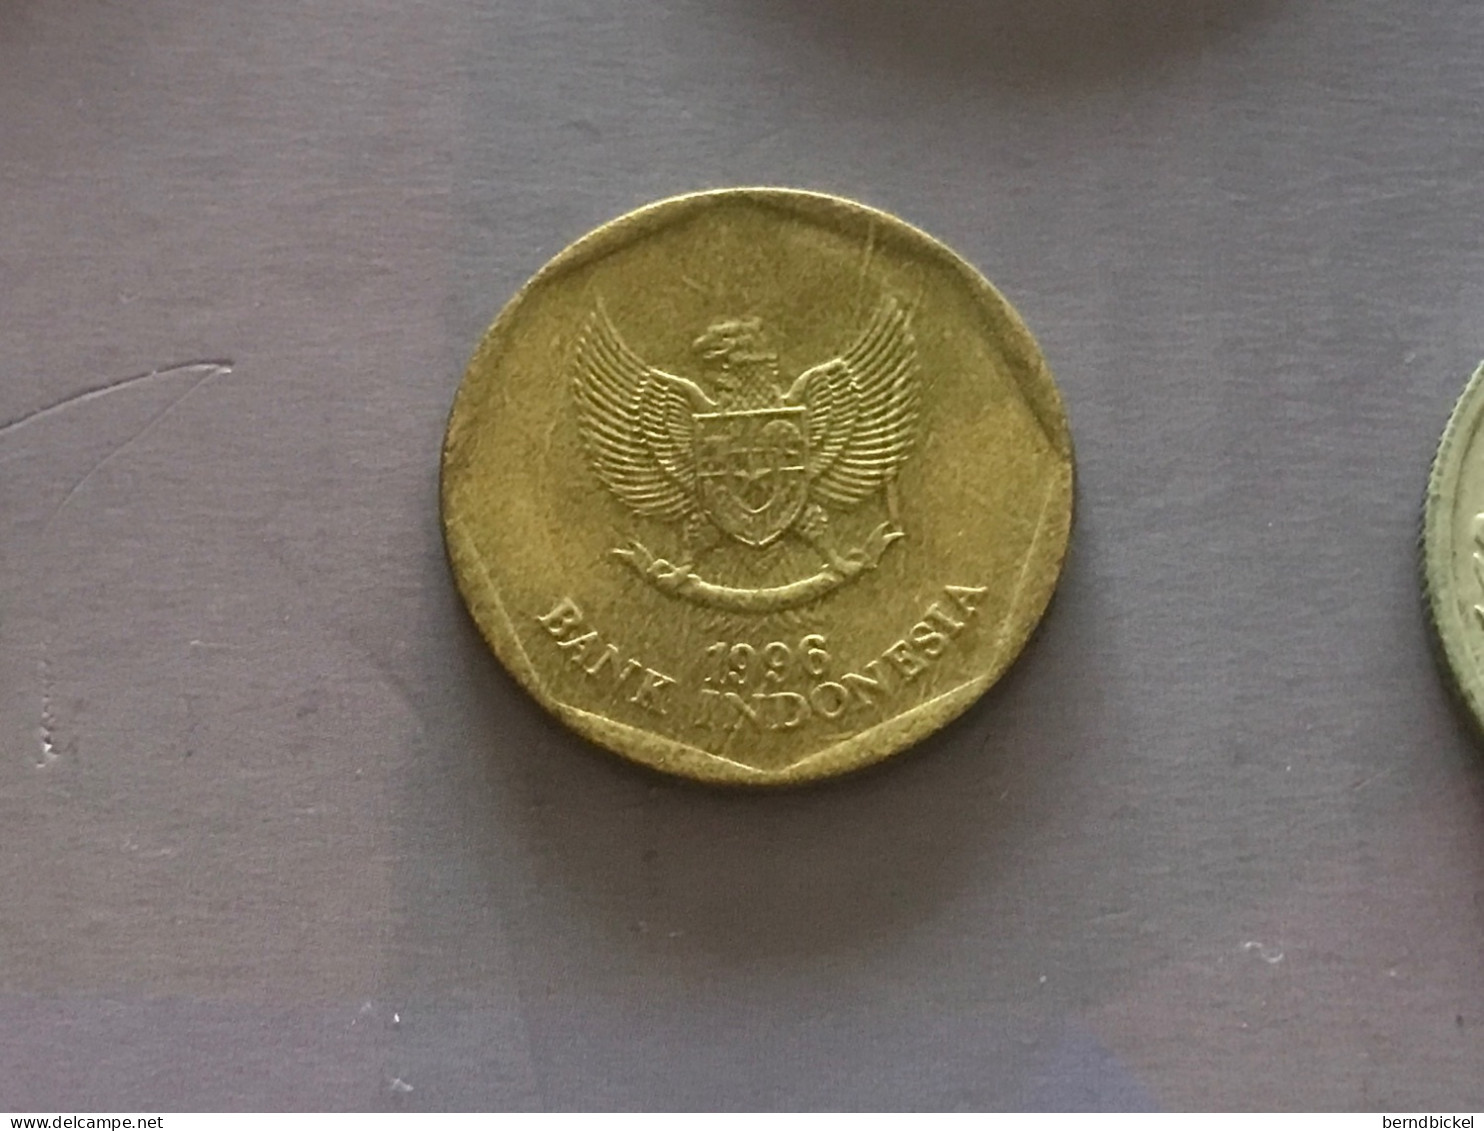 Münze Münzen Umlaufmünze Indonesien 100 Rupien 1996 - Indonesia